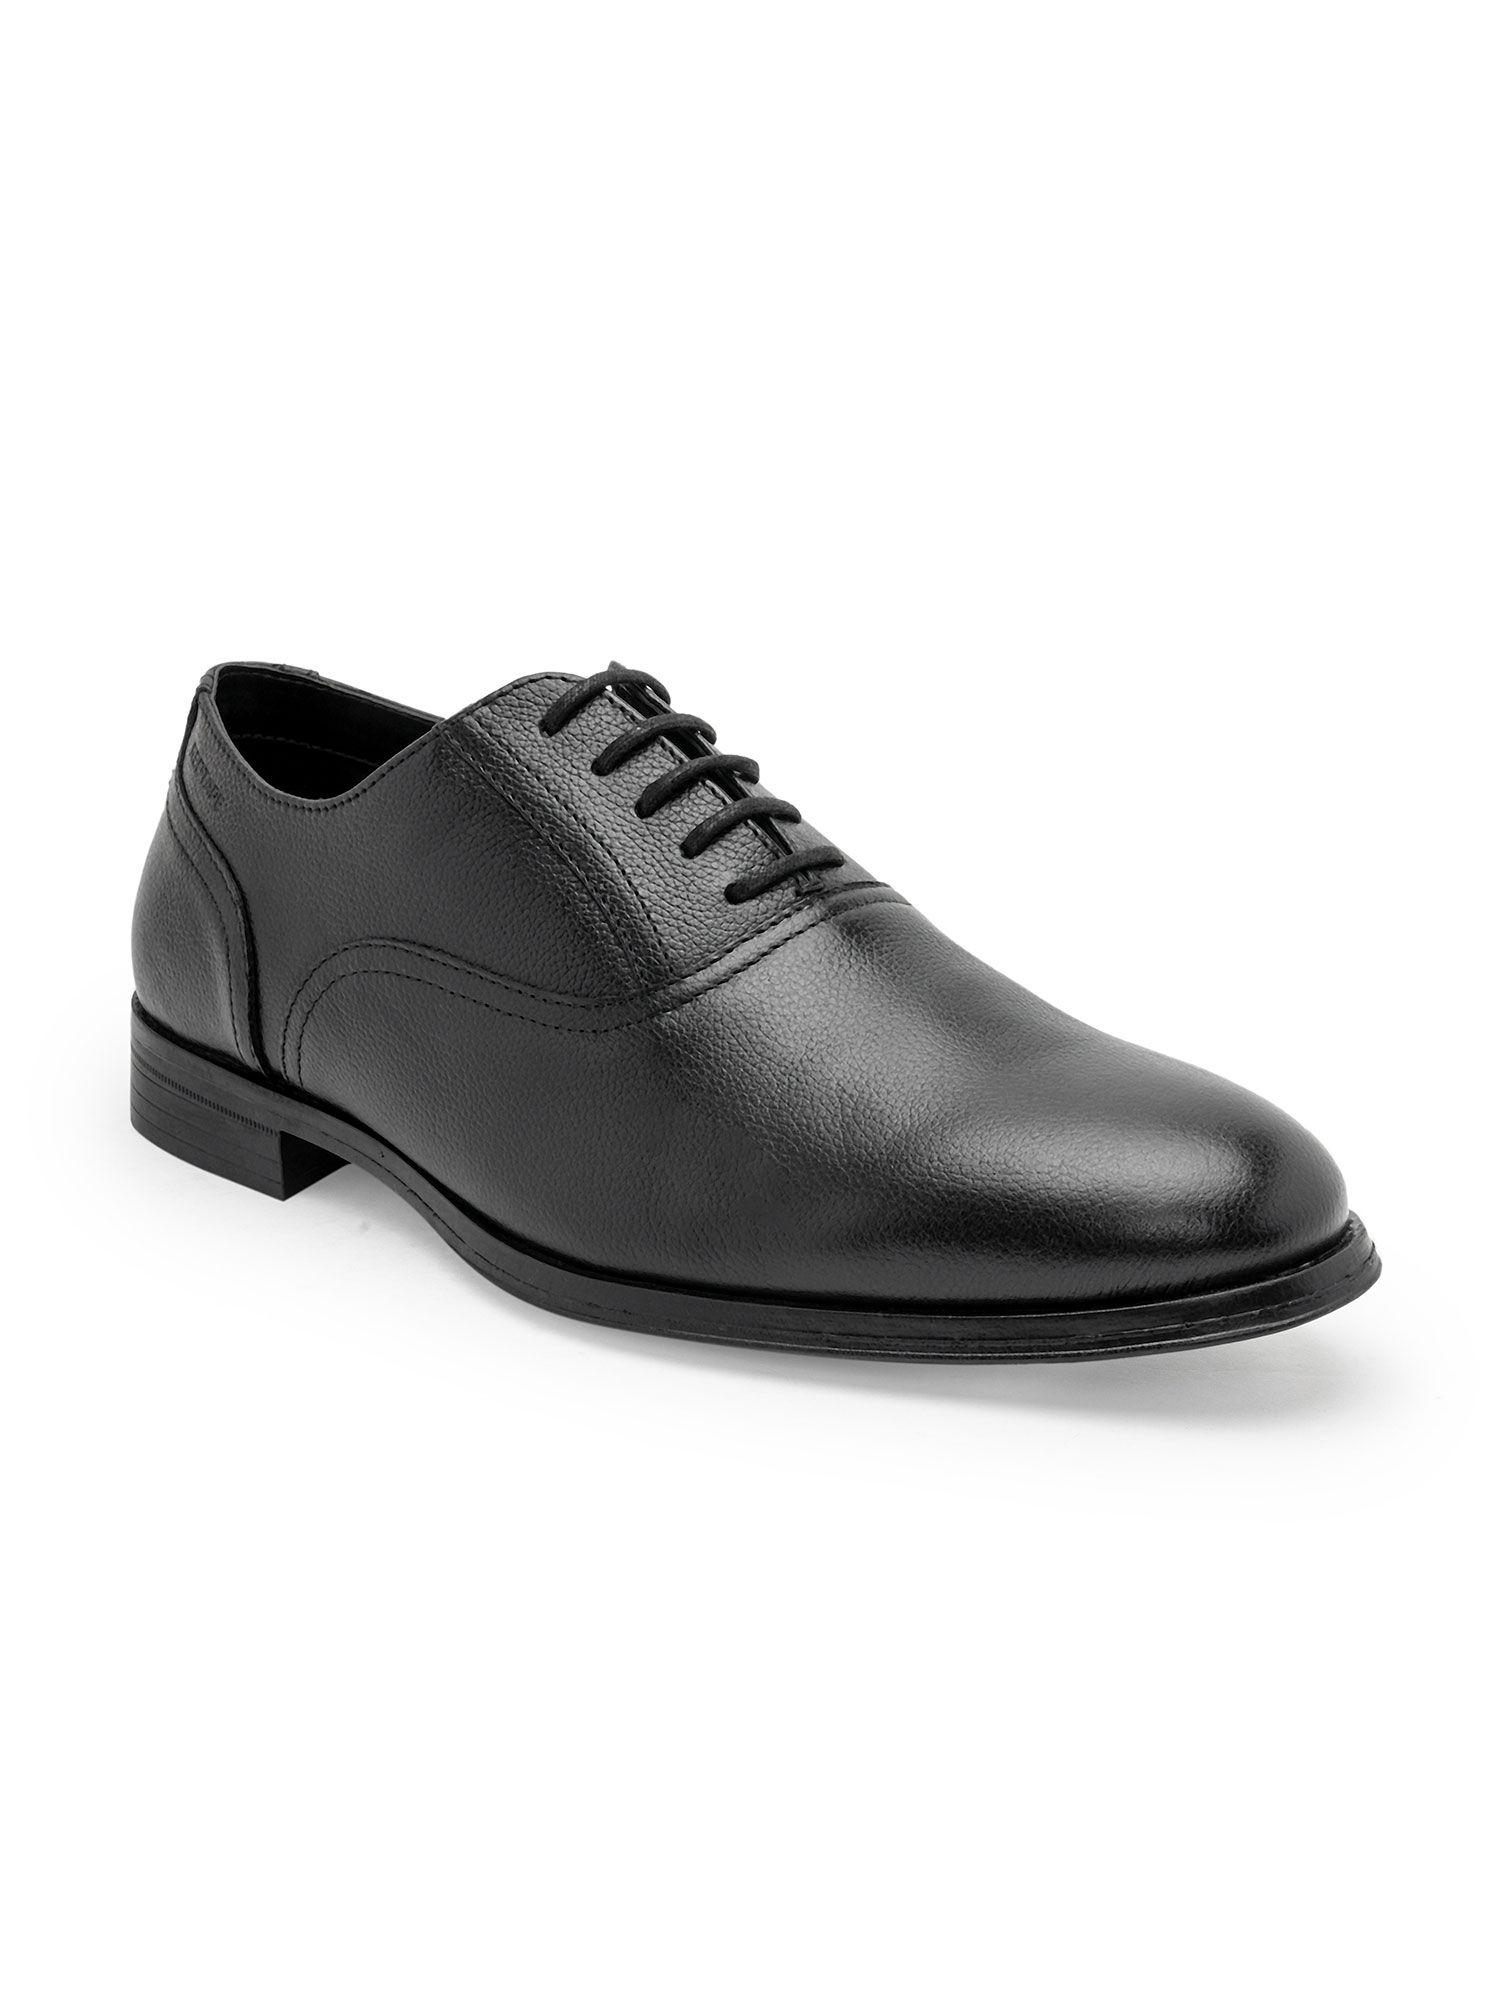 mens solid black genuine leather formal derbies shoes